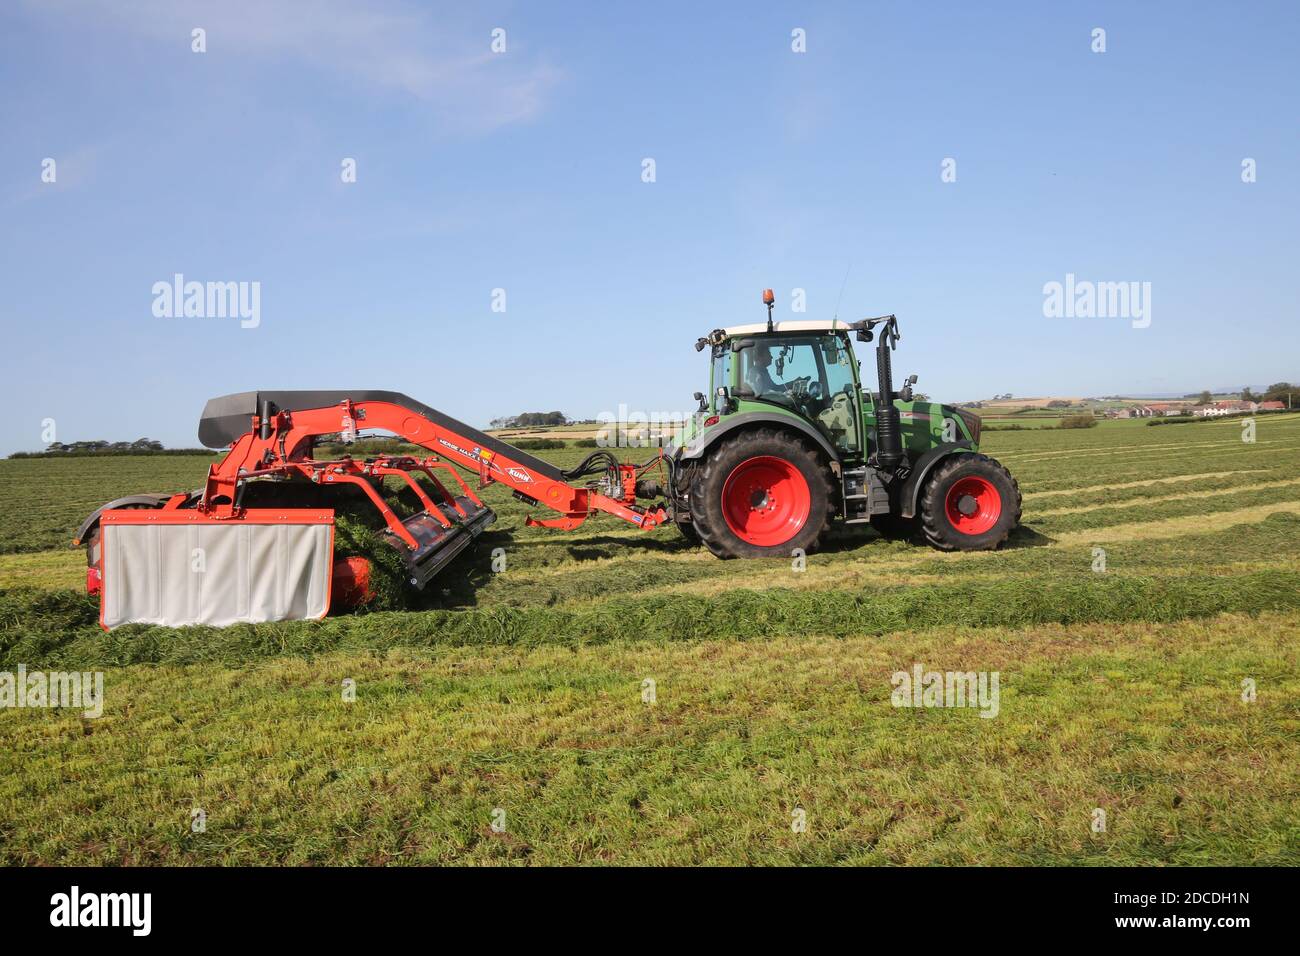 StrandHead Farm, Tarbolton, Ayrshire, Scotland 19 Sept 2020  Kuhn Merge Maxx raking machine in use turning over the grass Stock Photo